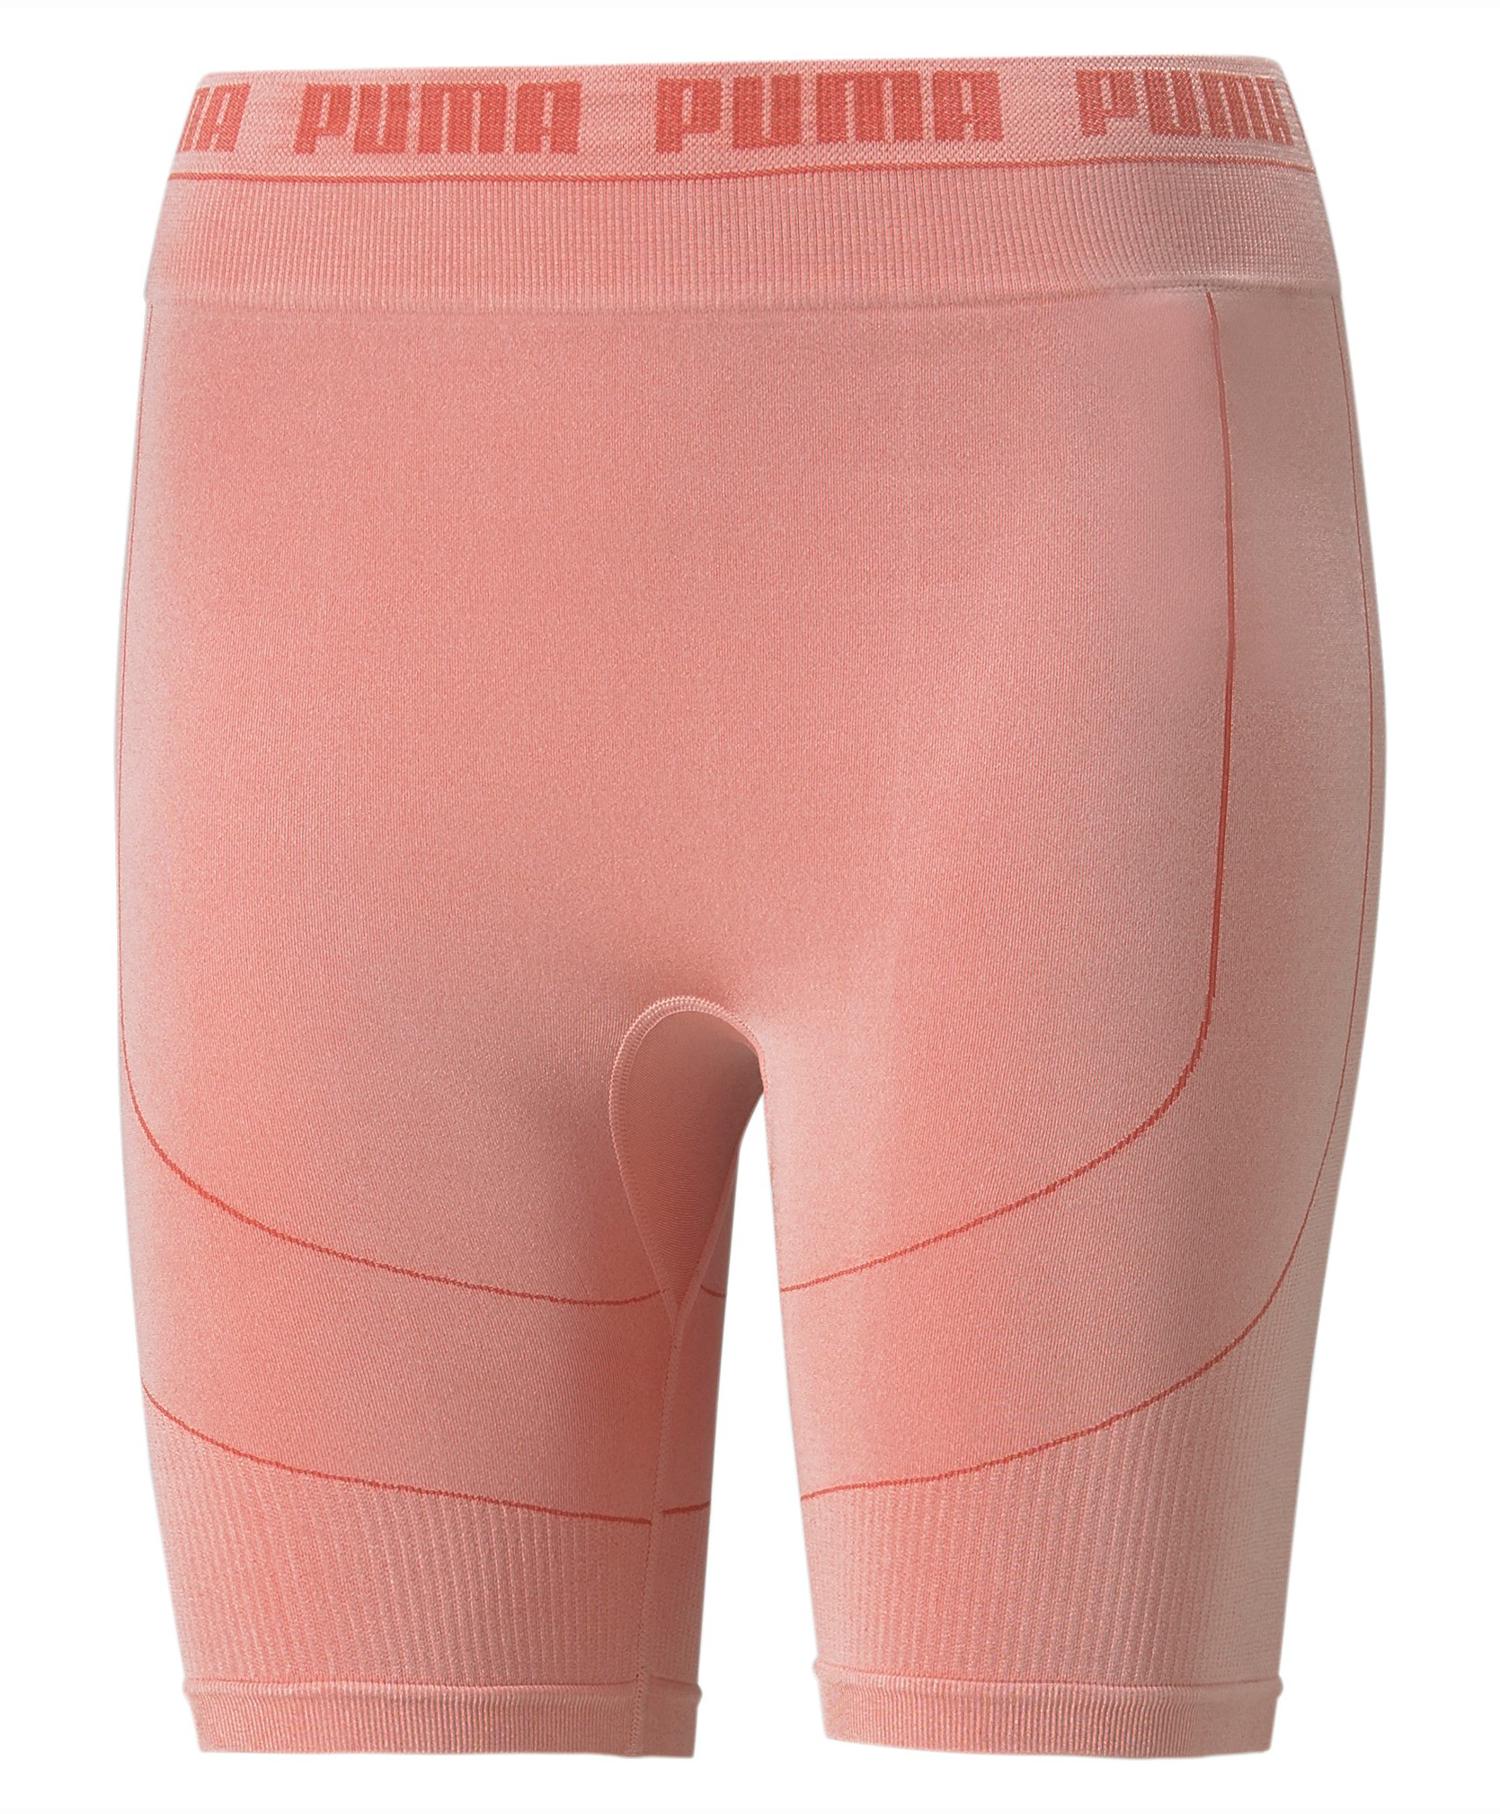 Puma Evoknit shorts